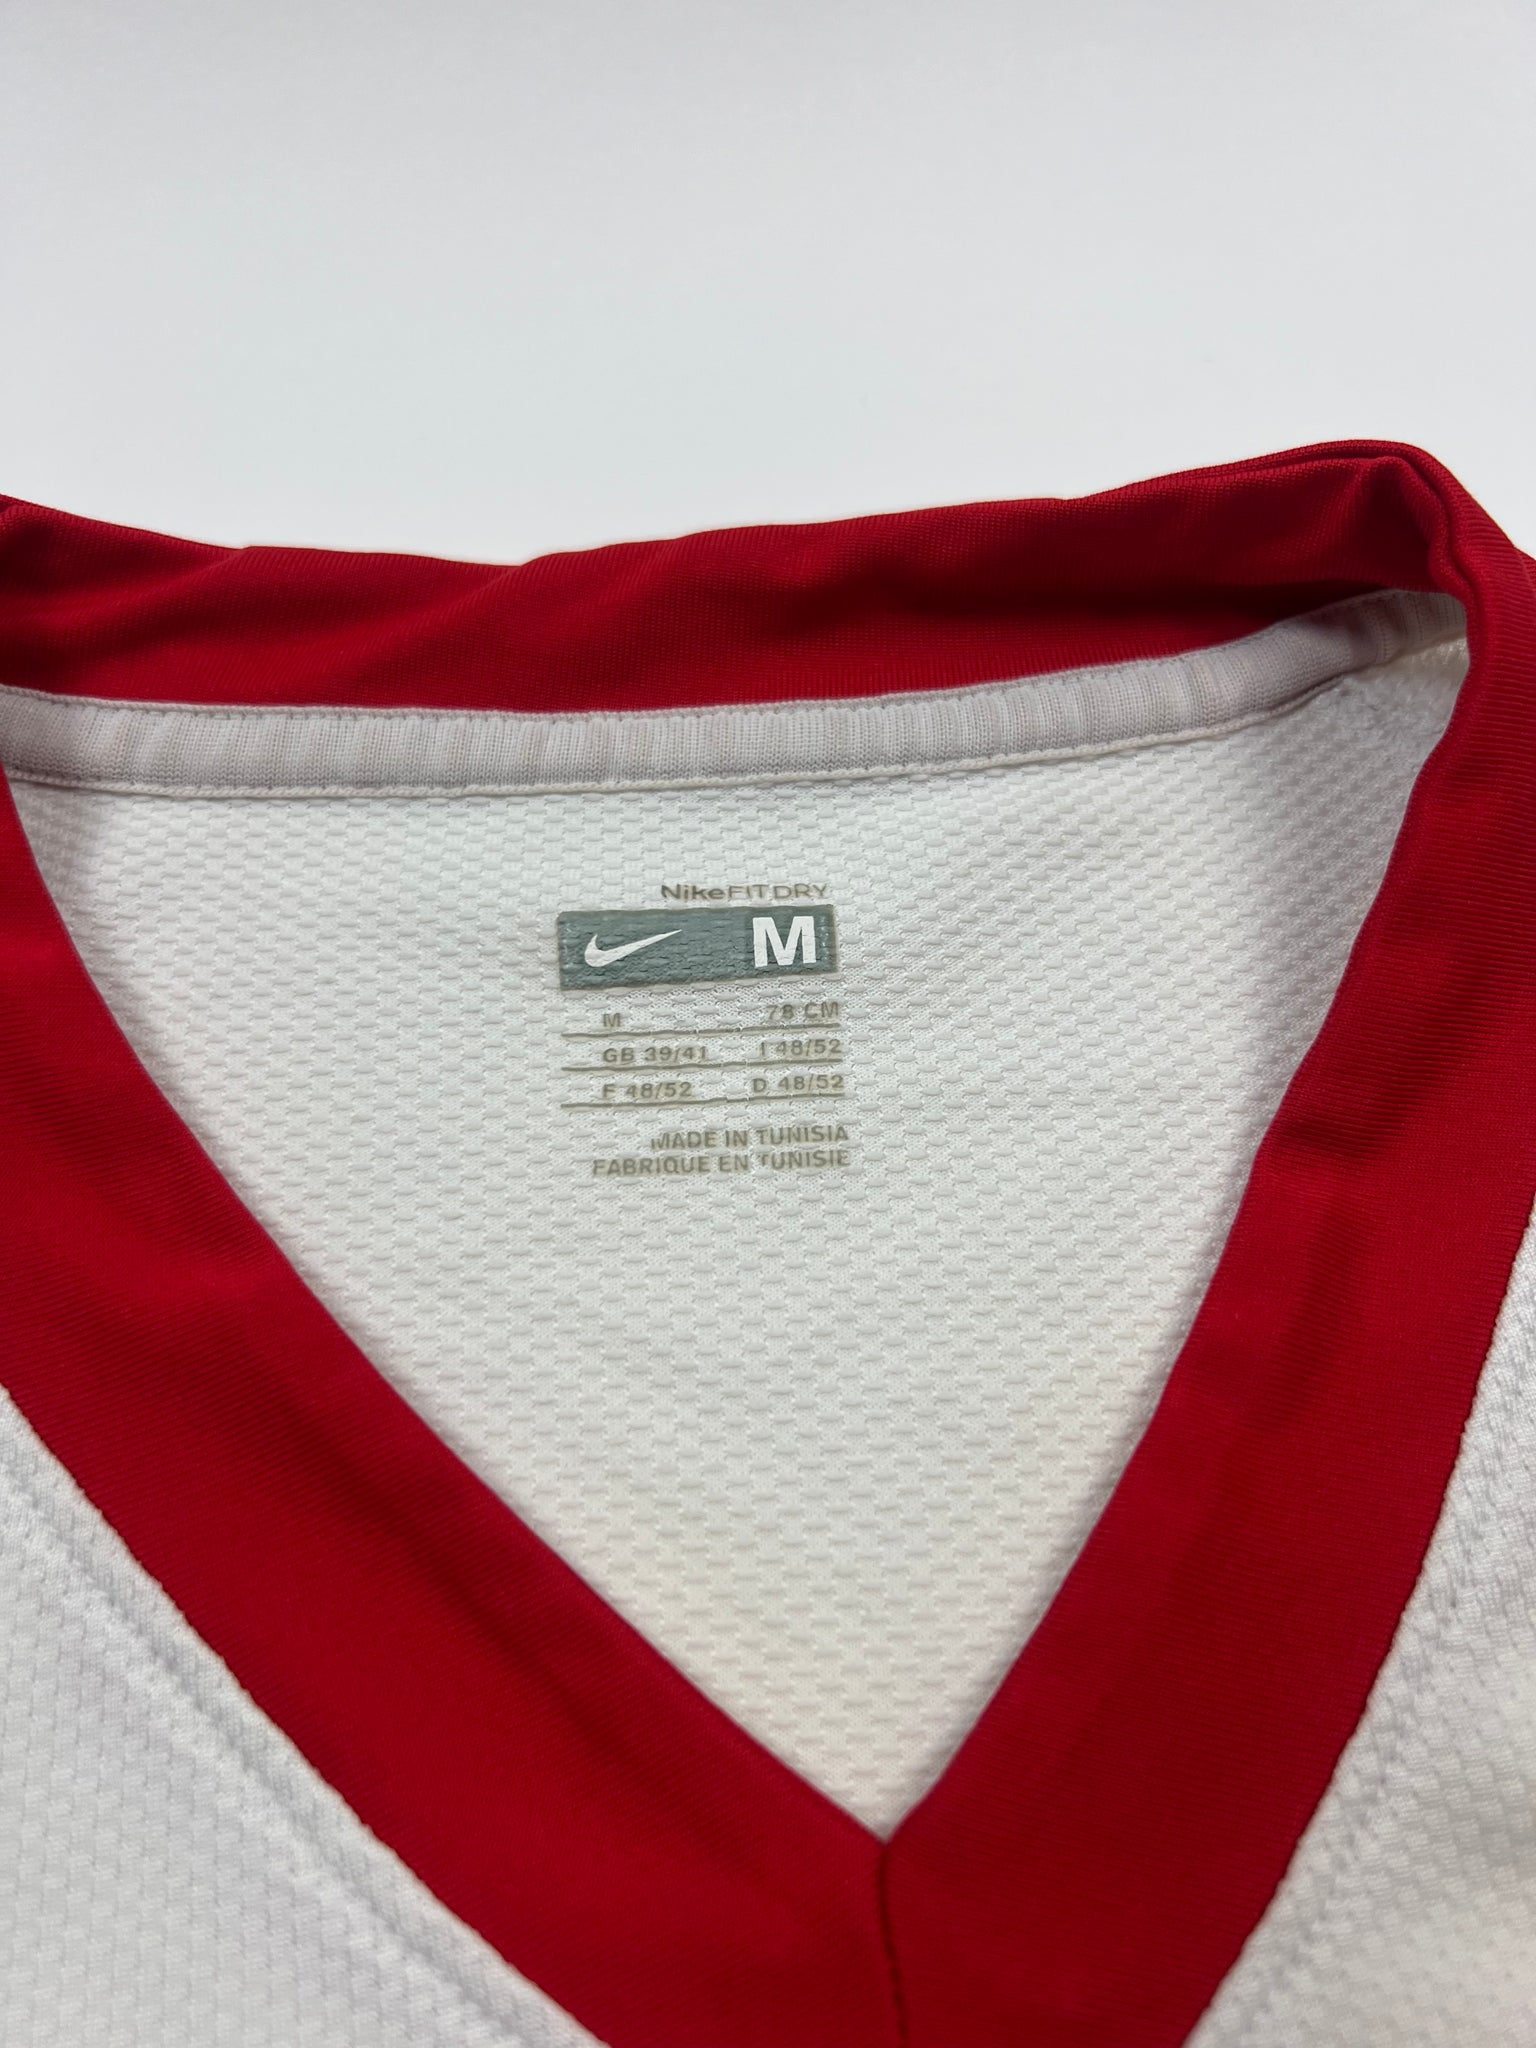 Nike Portugal Jersey (M)